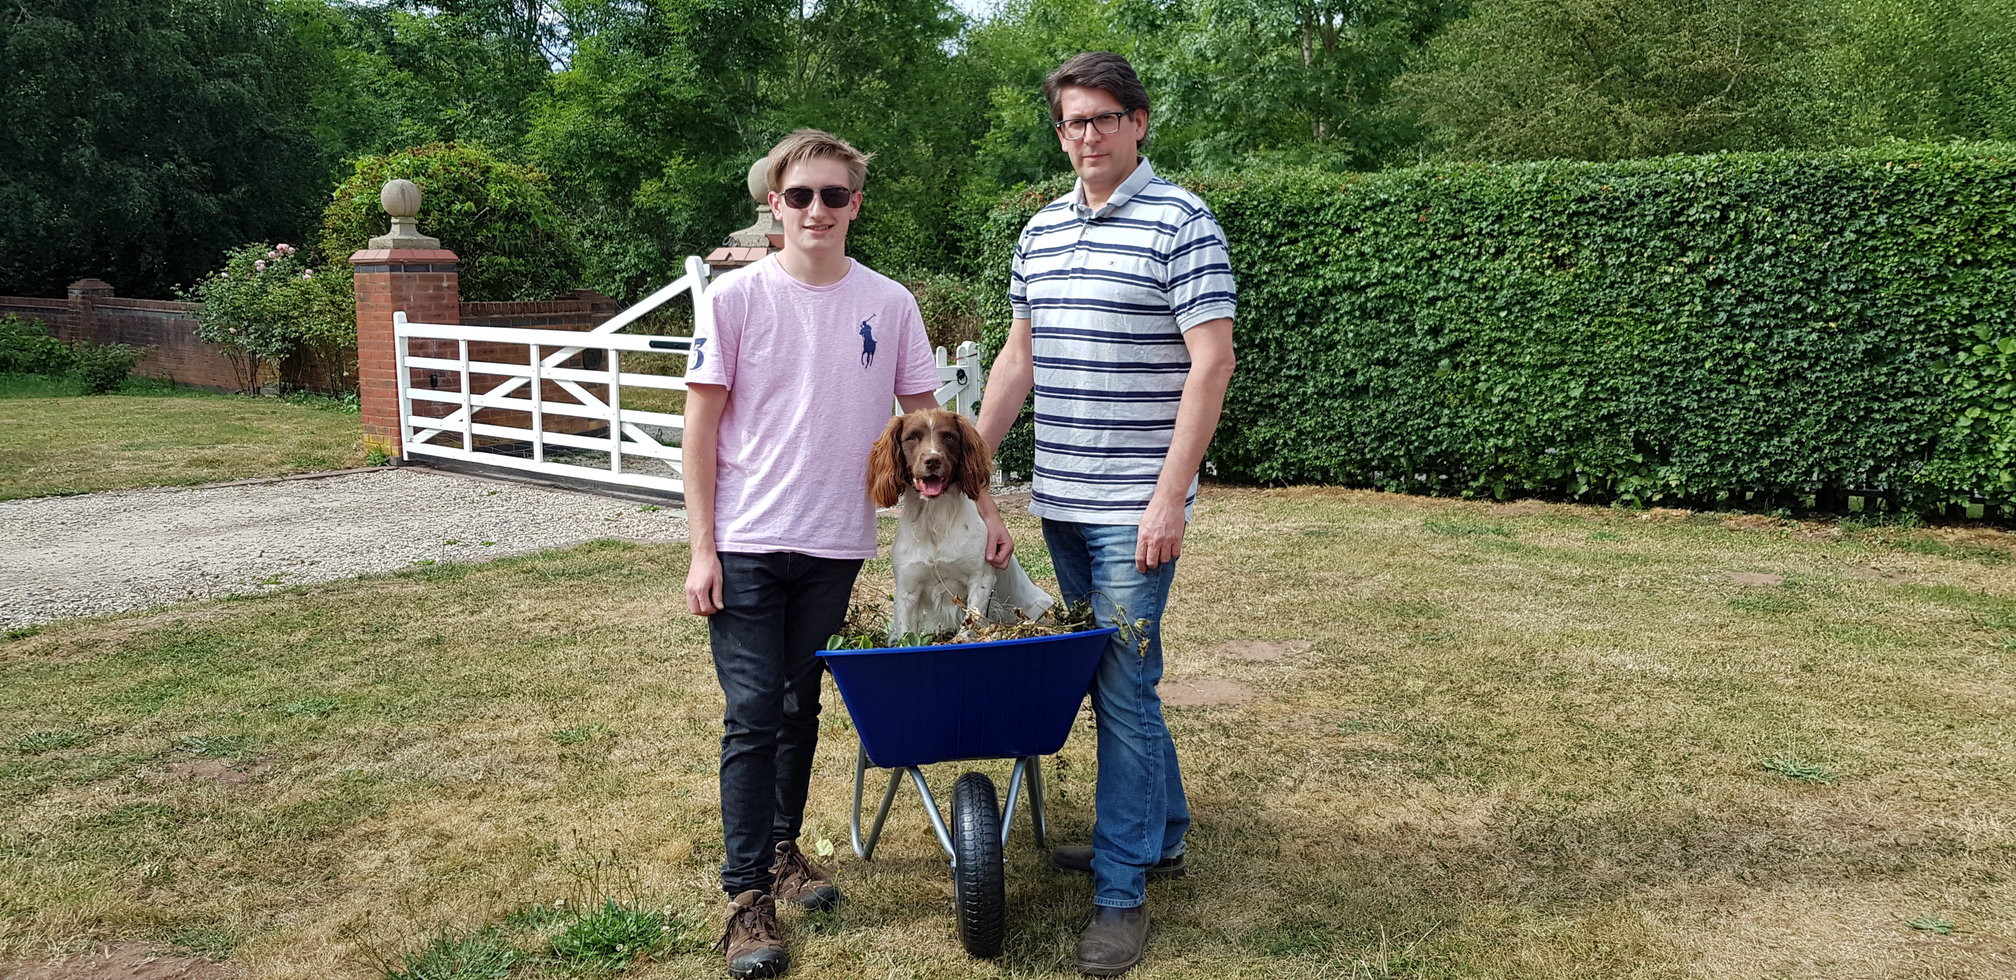 (Left to right) Mark and Toby Weymouth, winners of the Bullbarrow wheelbarrow